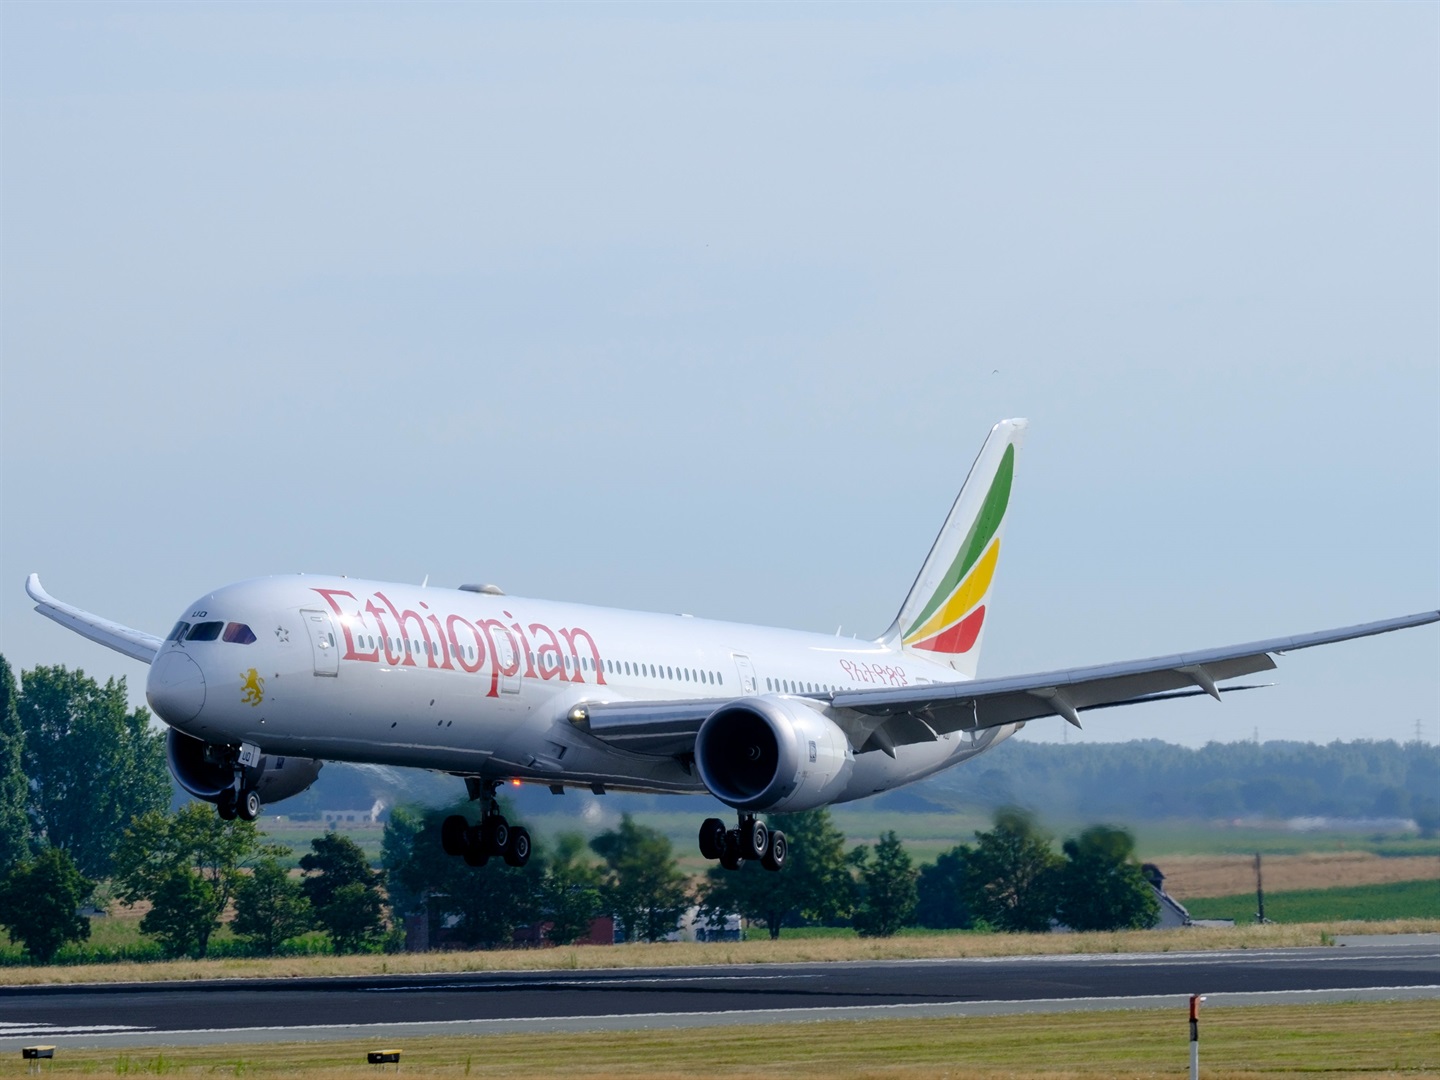 Эфиопиан Эйрлайнс. Эфиопия Аирлинес. Boeing 787-800 Dreamliner Ethiopian. Ethiopian Airlines Flight 409.